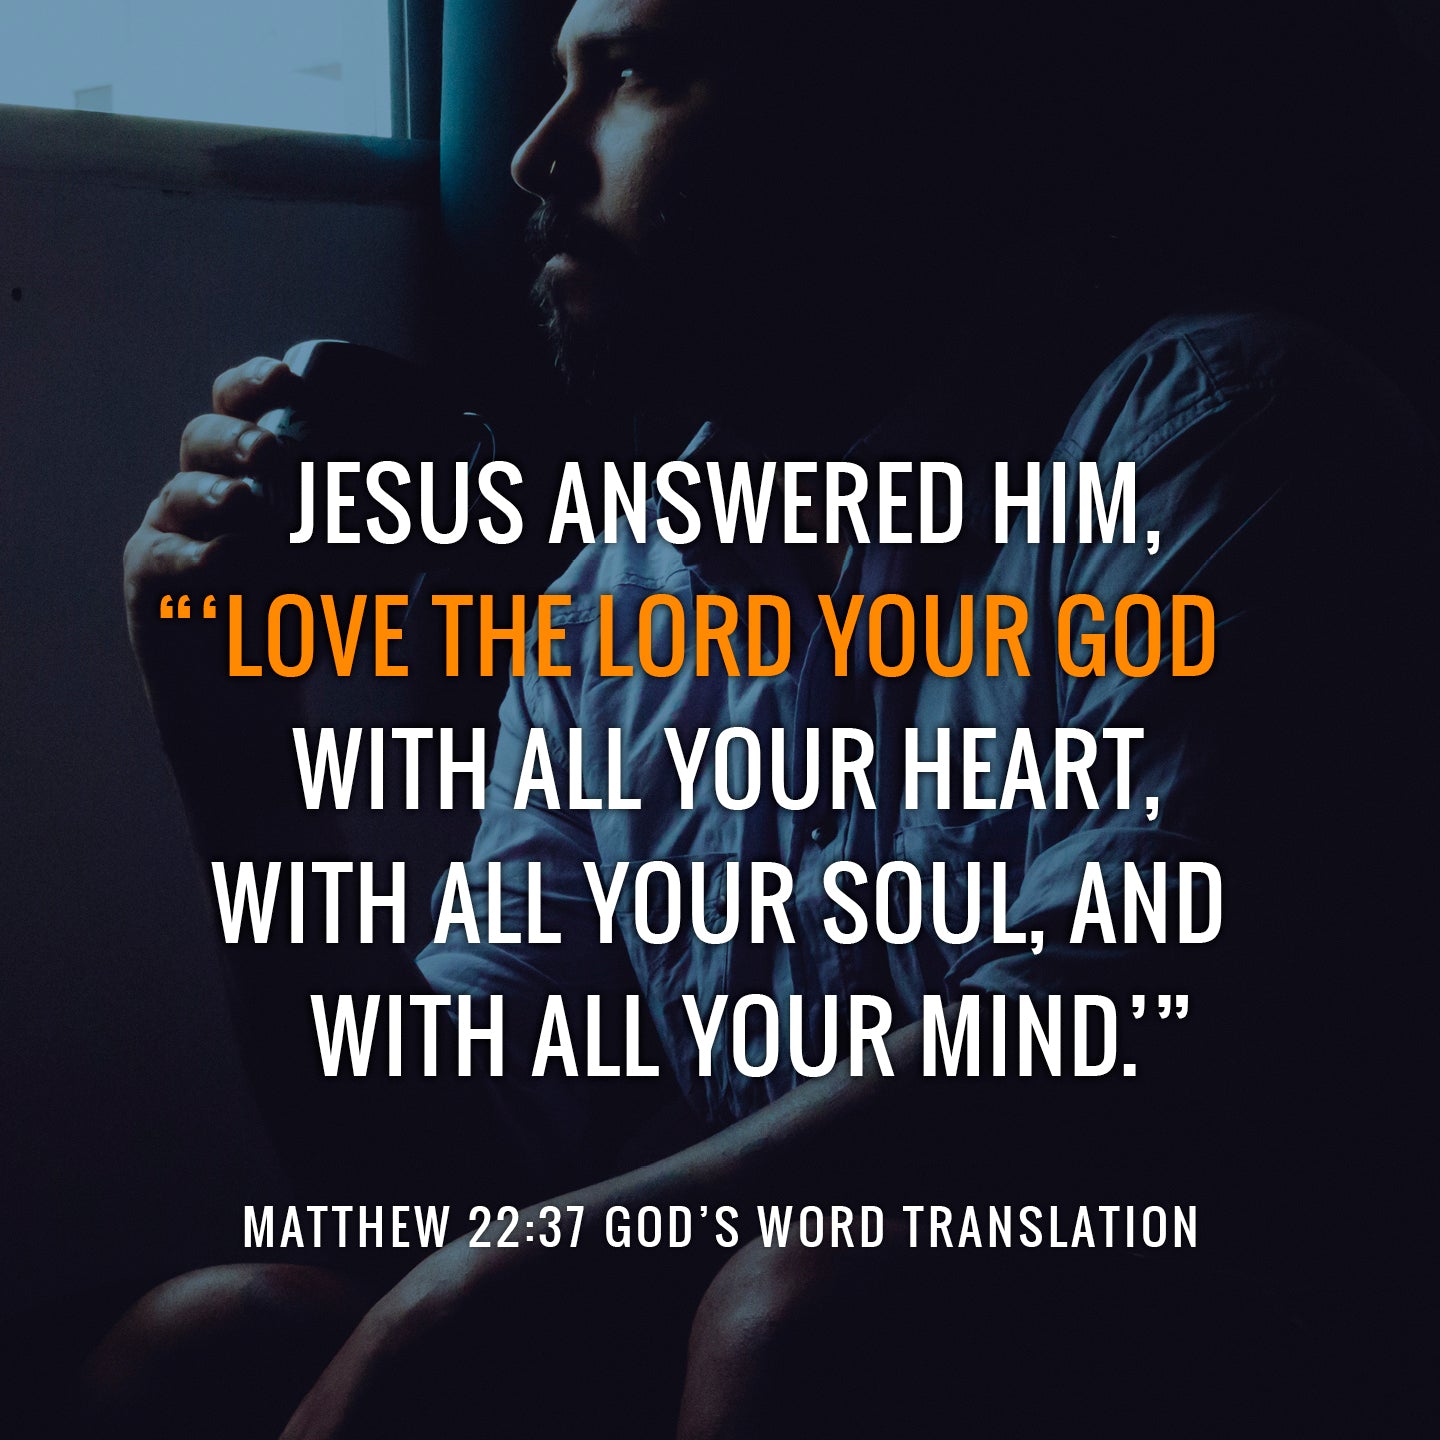 matthew bible verses about love